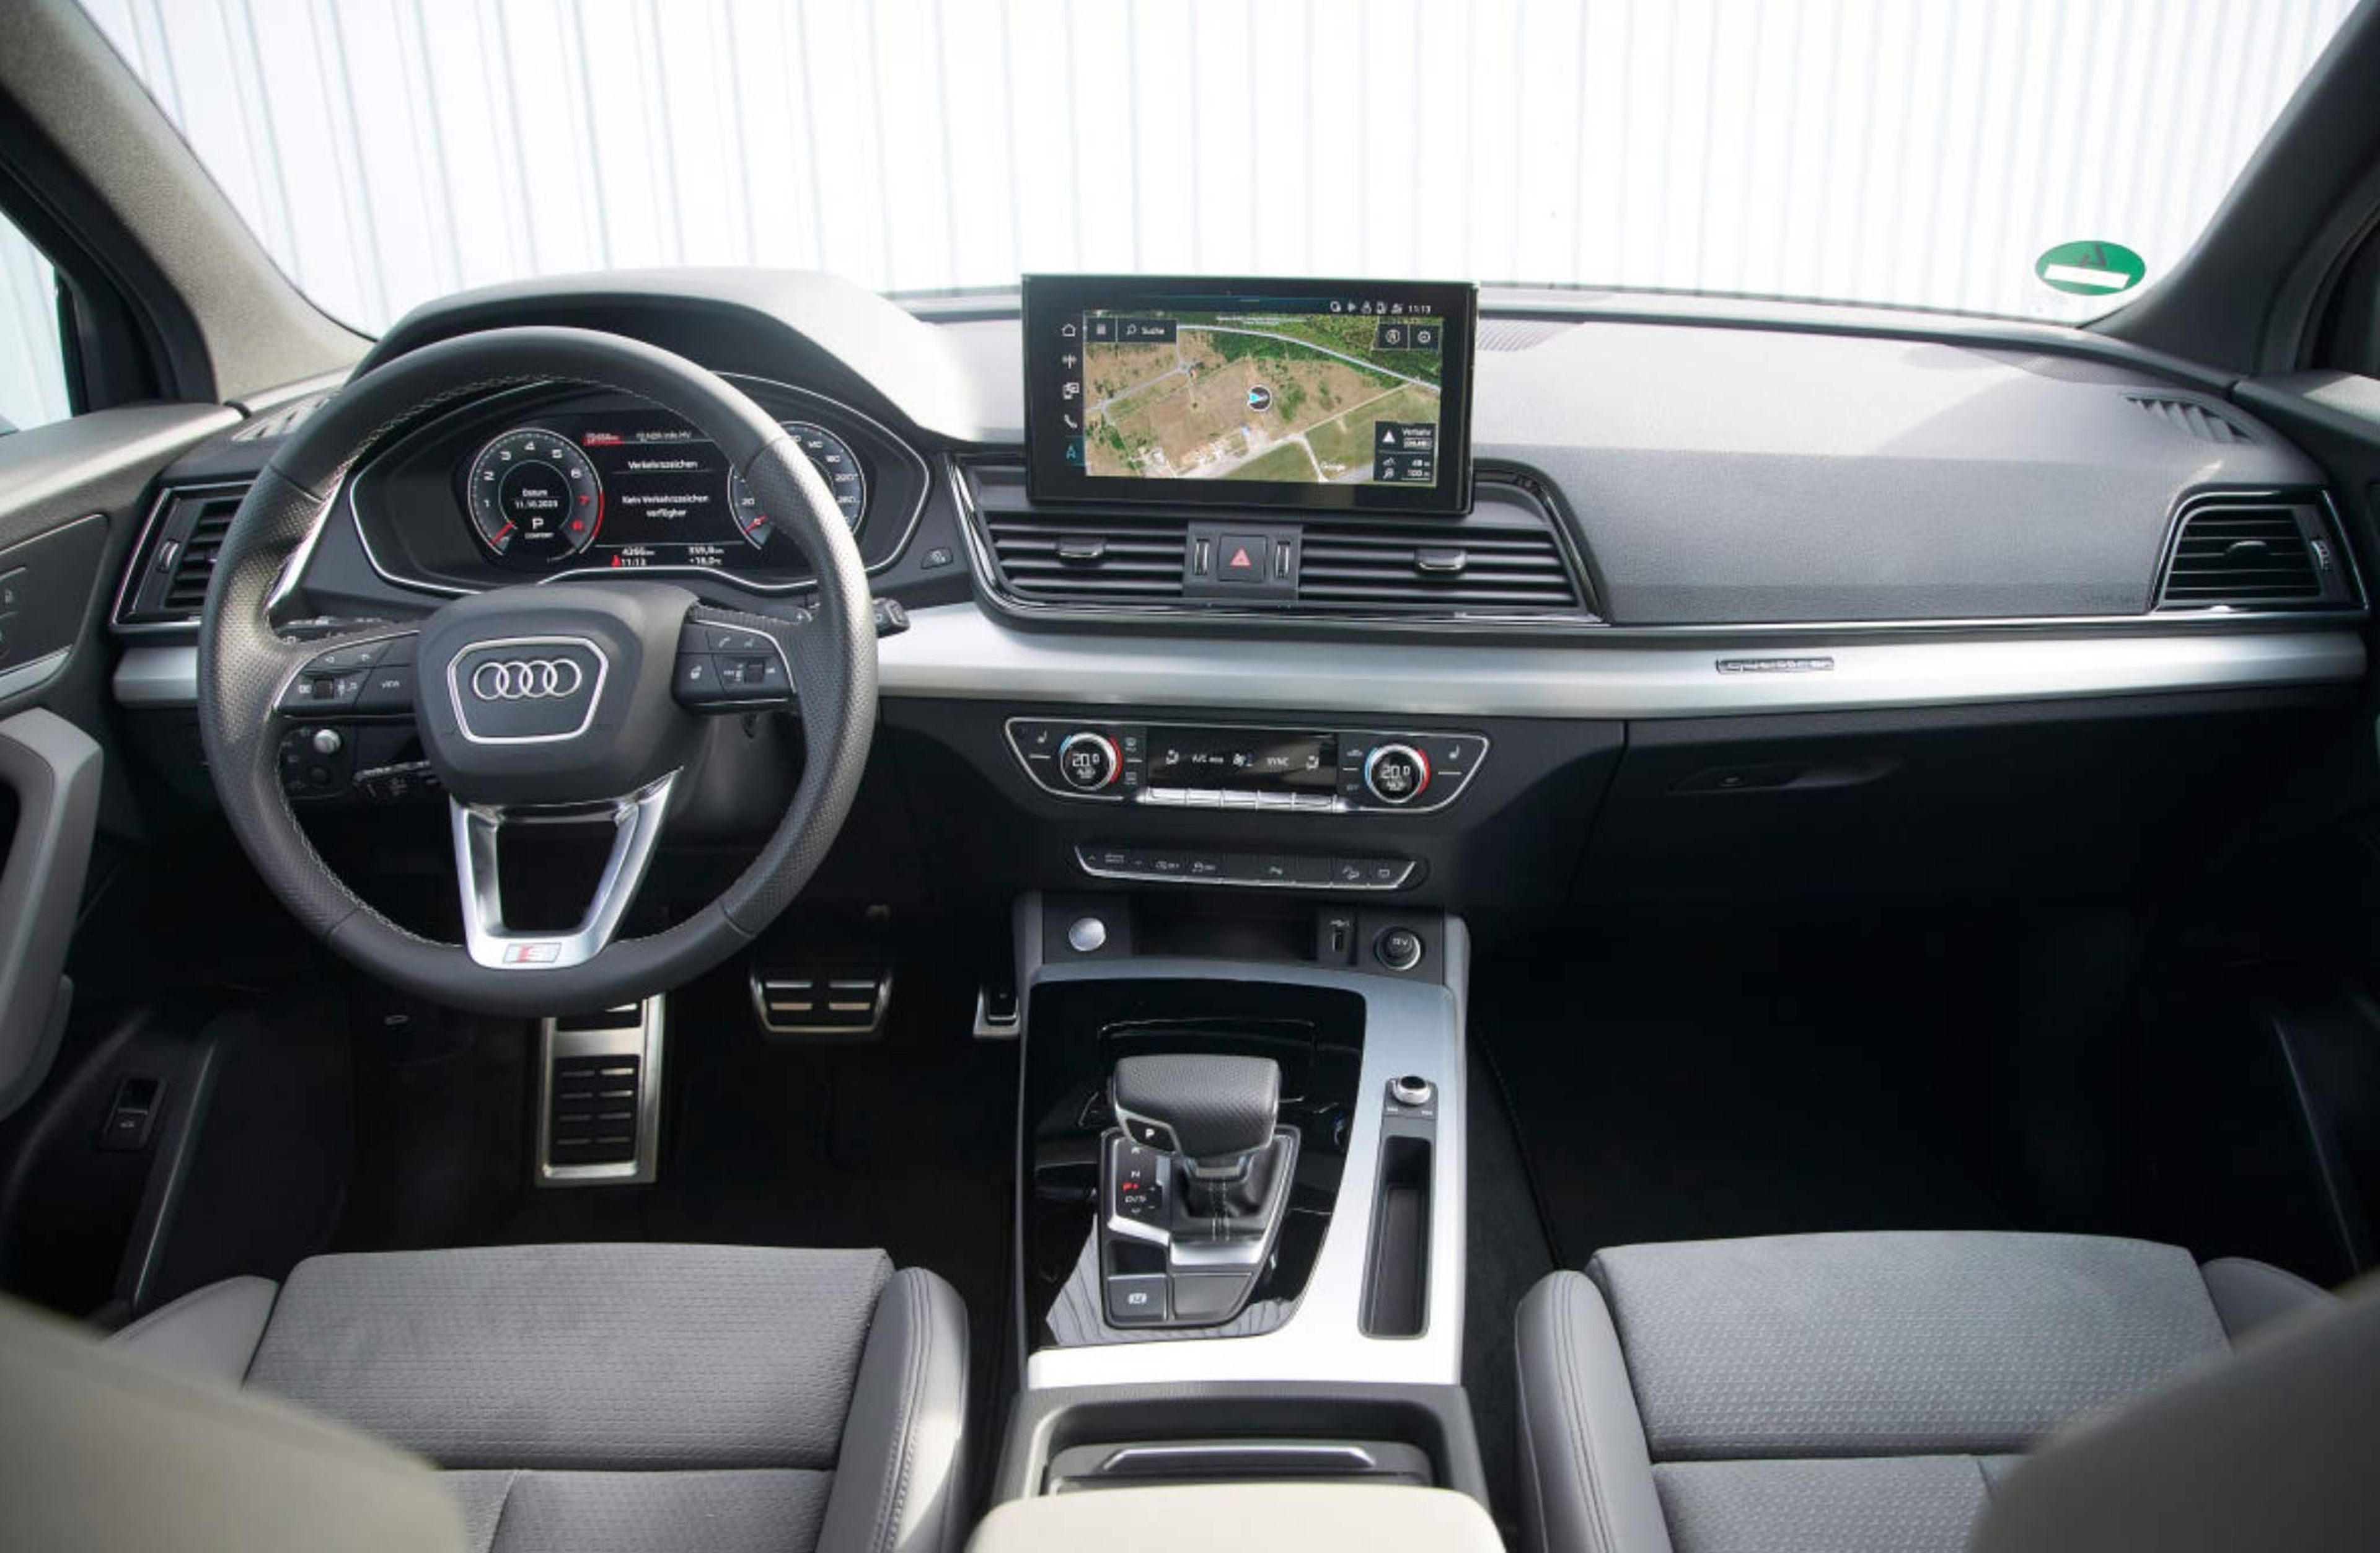 Comparativa: Audi Q5 Sportback vs BMW X4 y Mercedes GLC cockpit 3